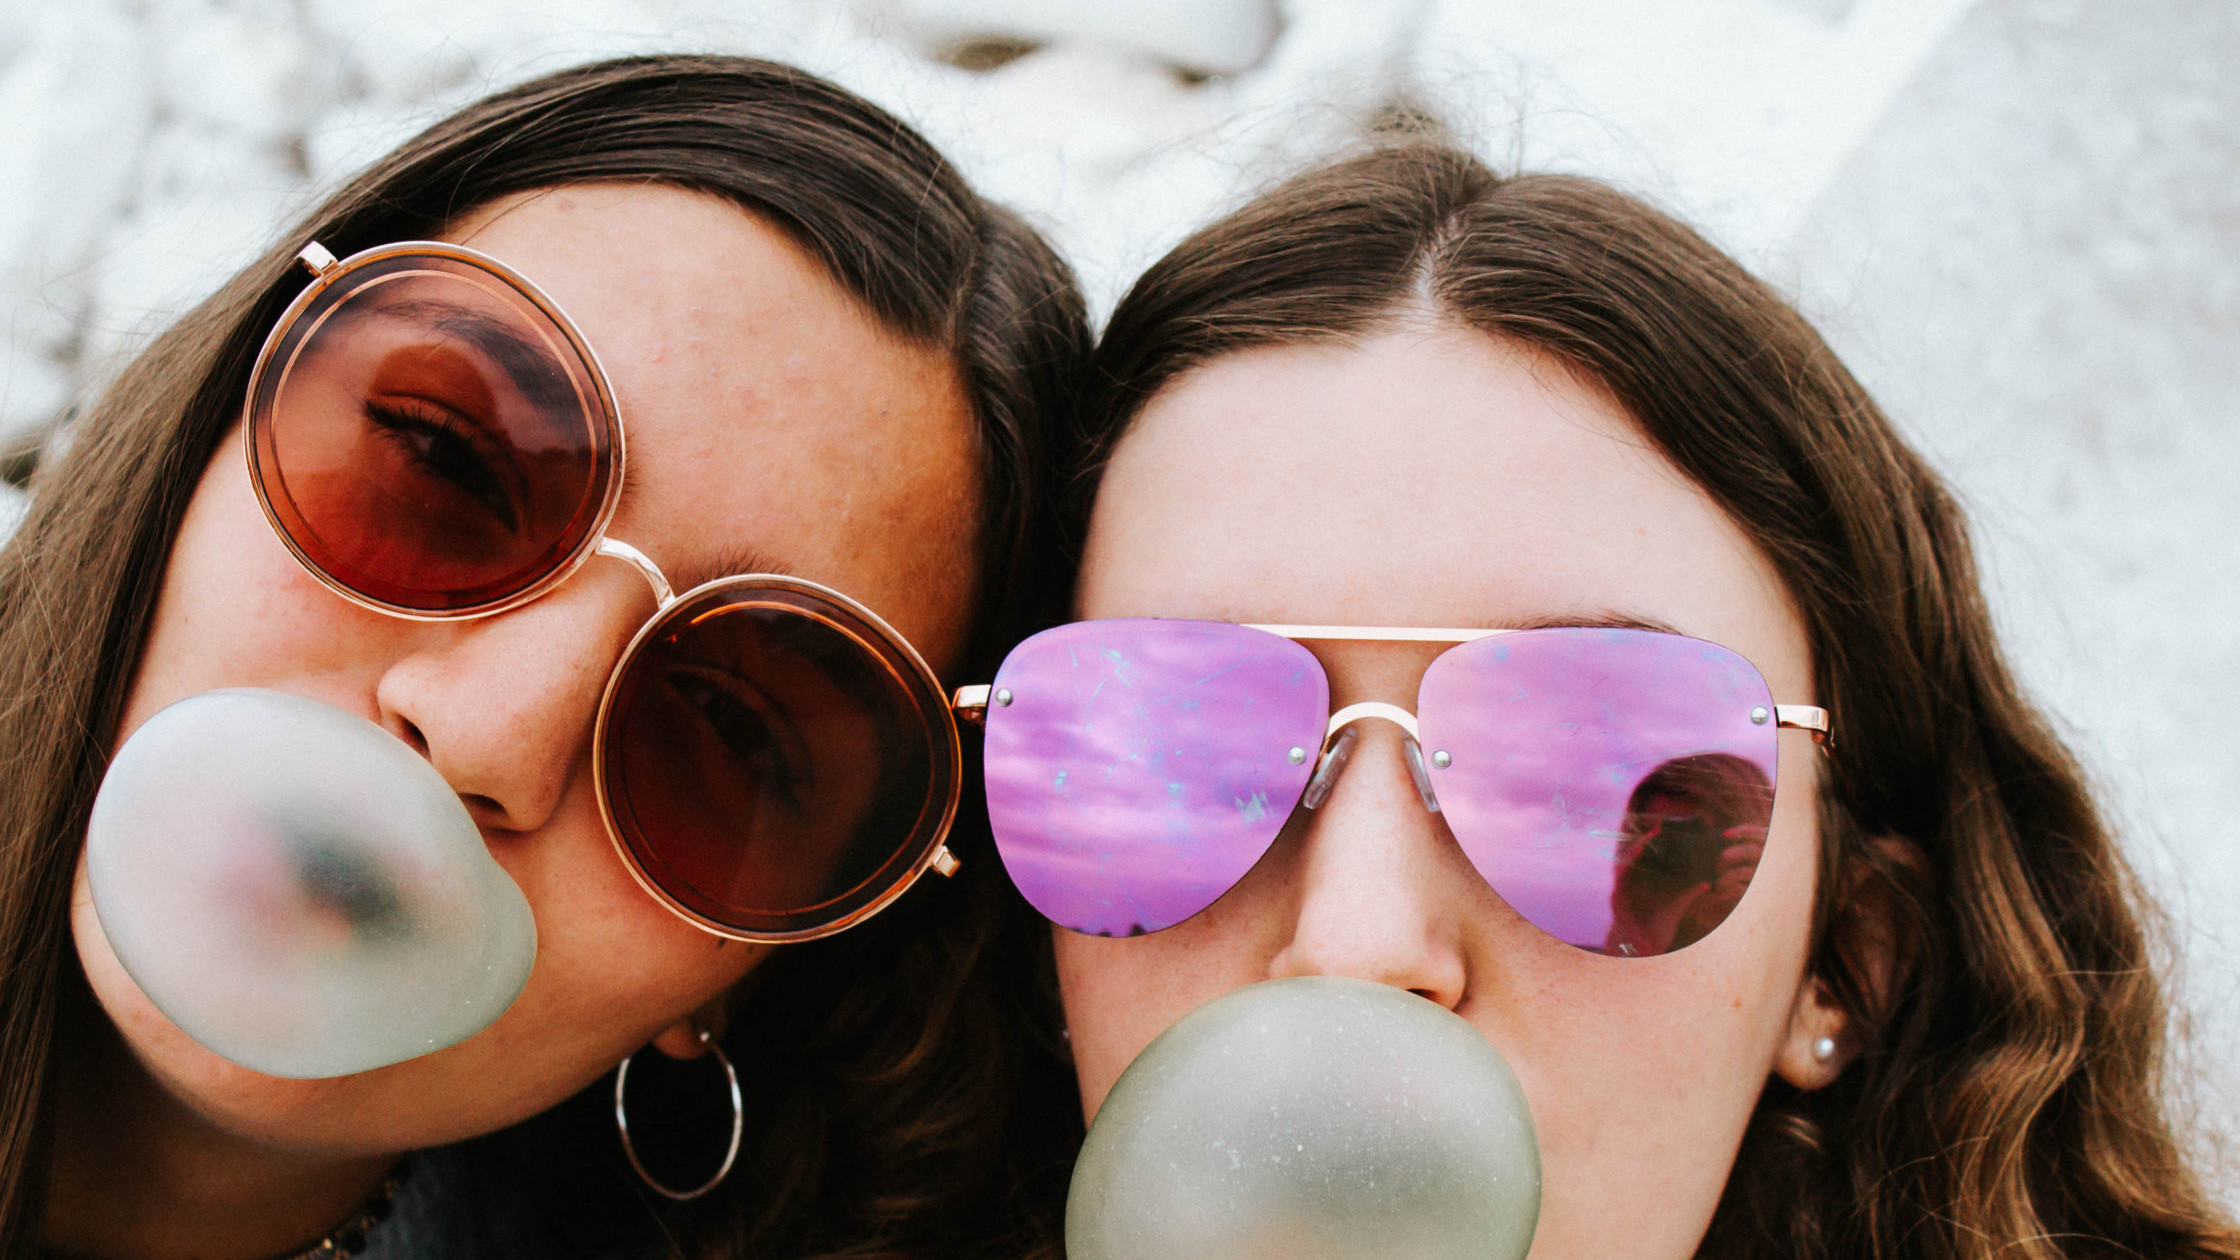 Two teen girls wearing sunglasses blow bubble gum bubbles.